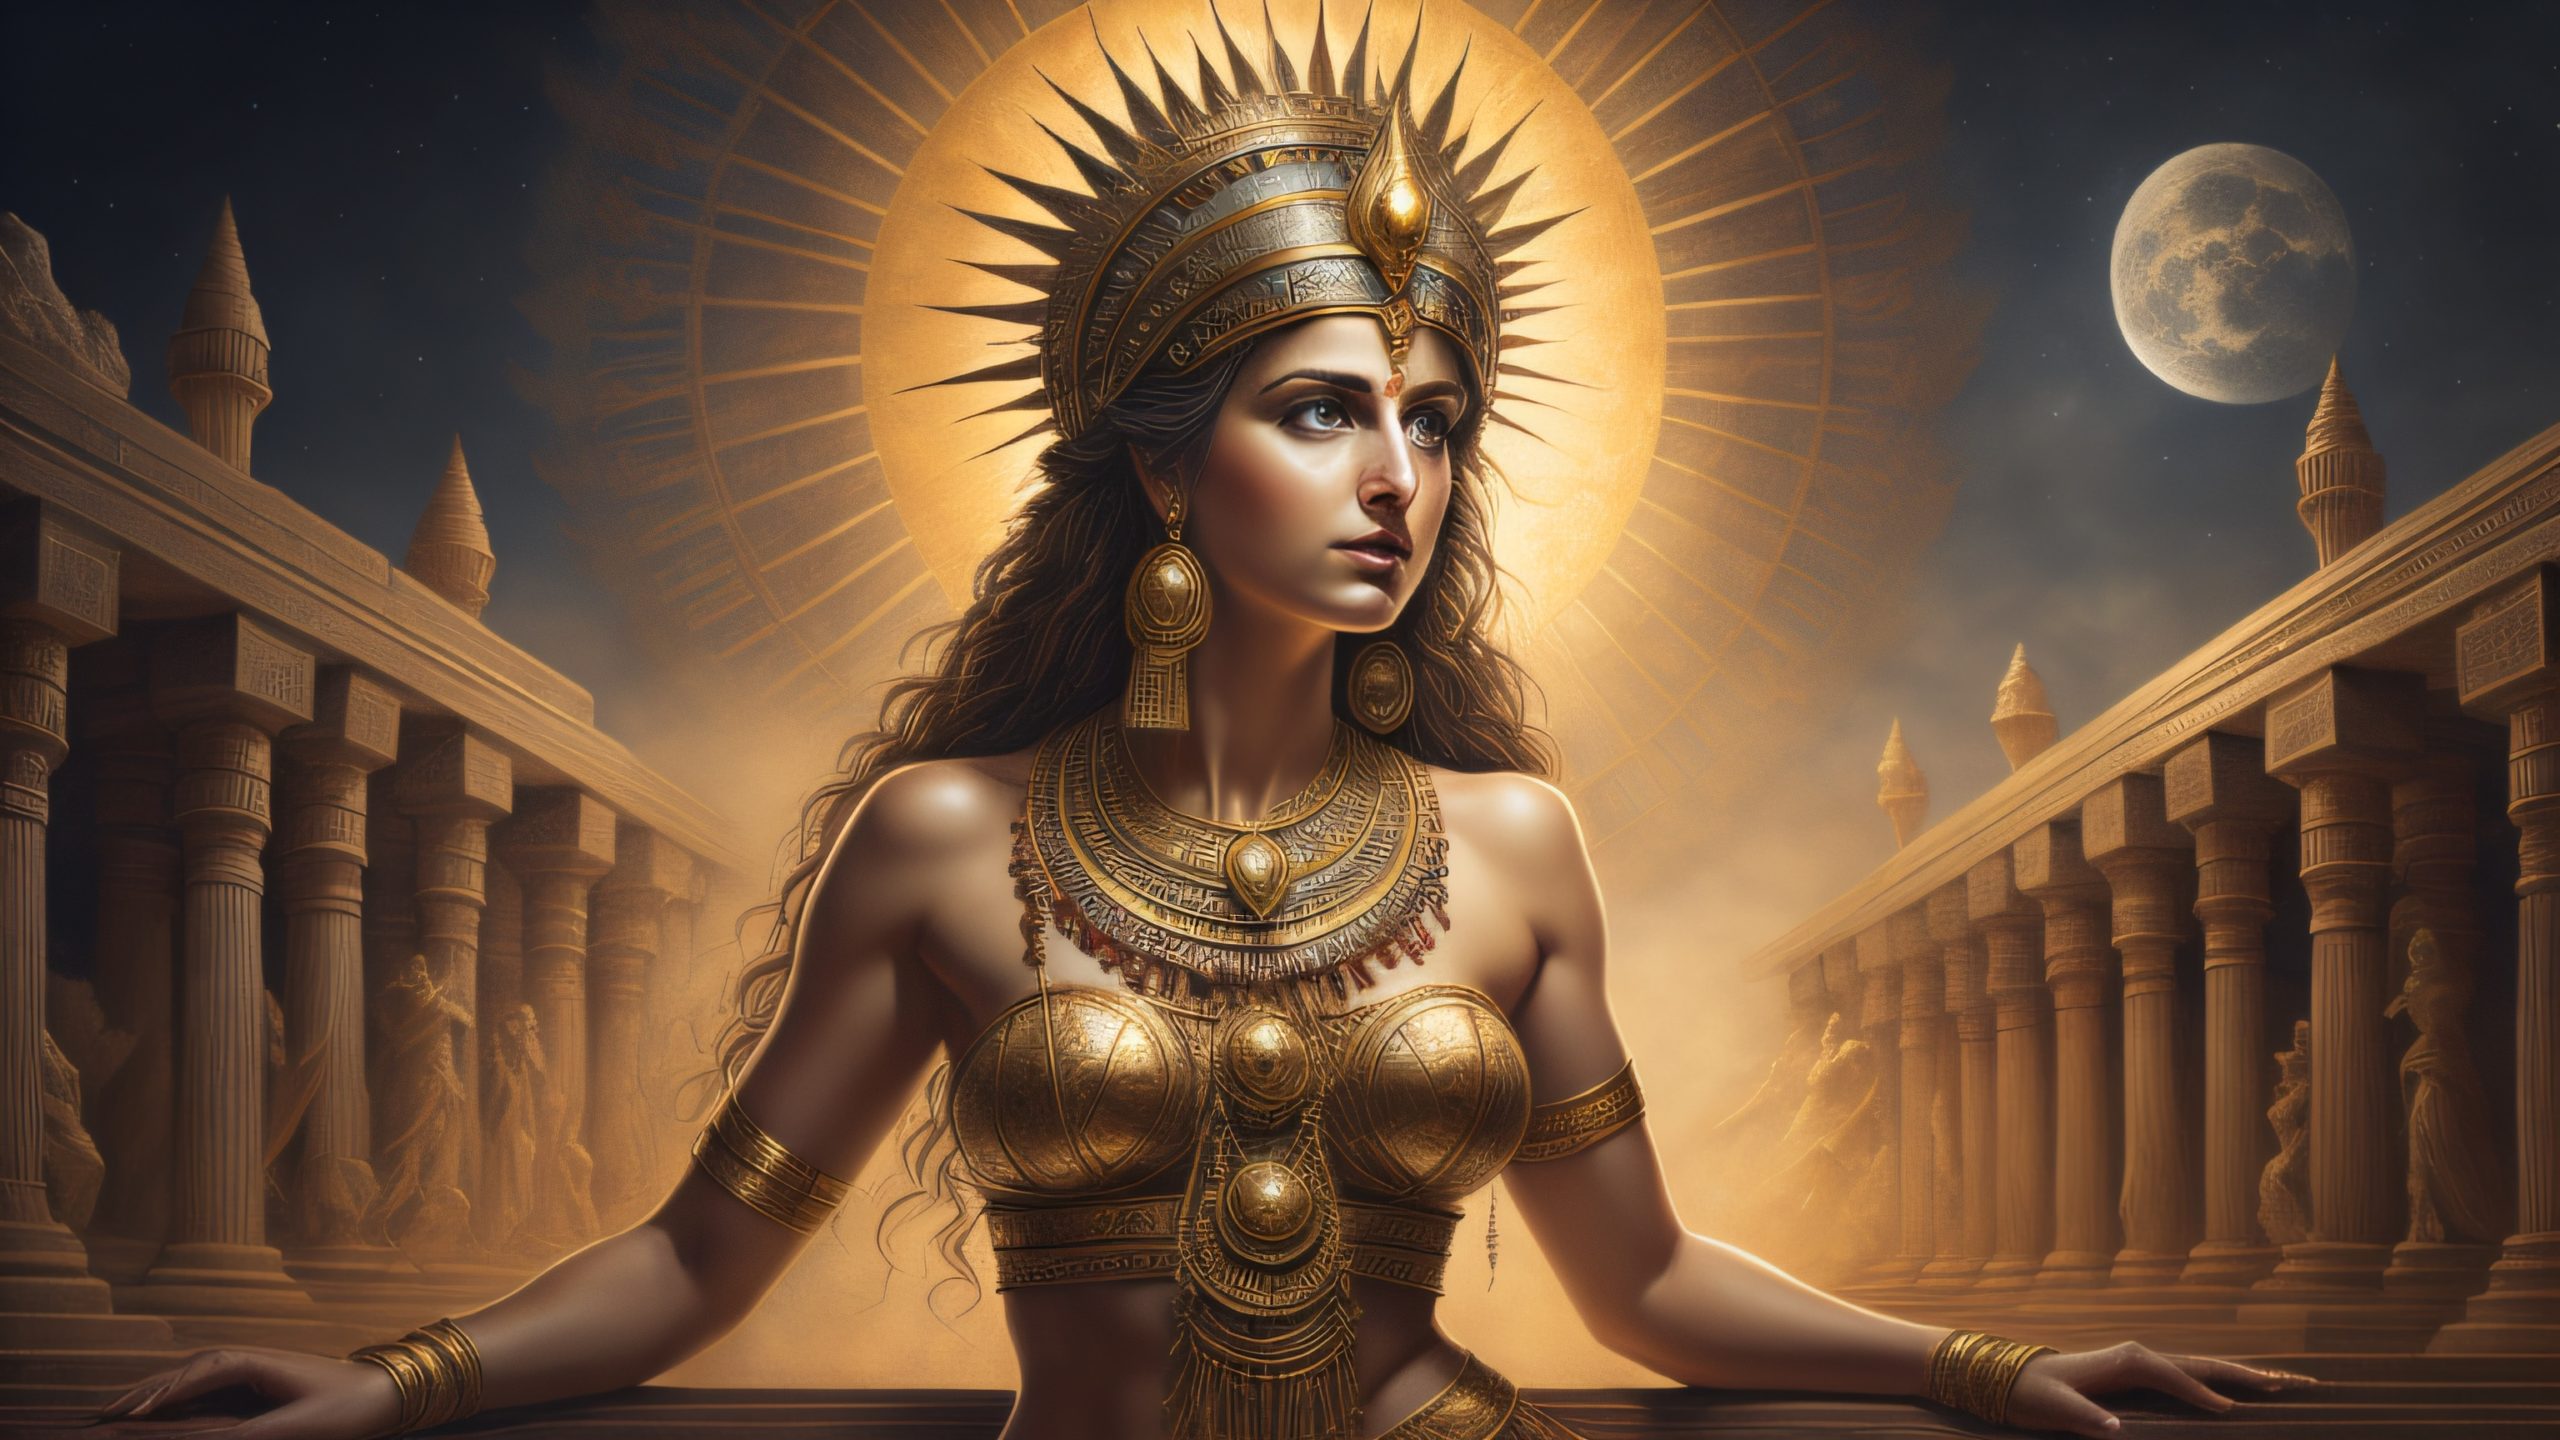 Representation of the goddess Ishtar